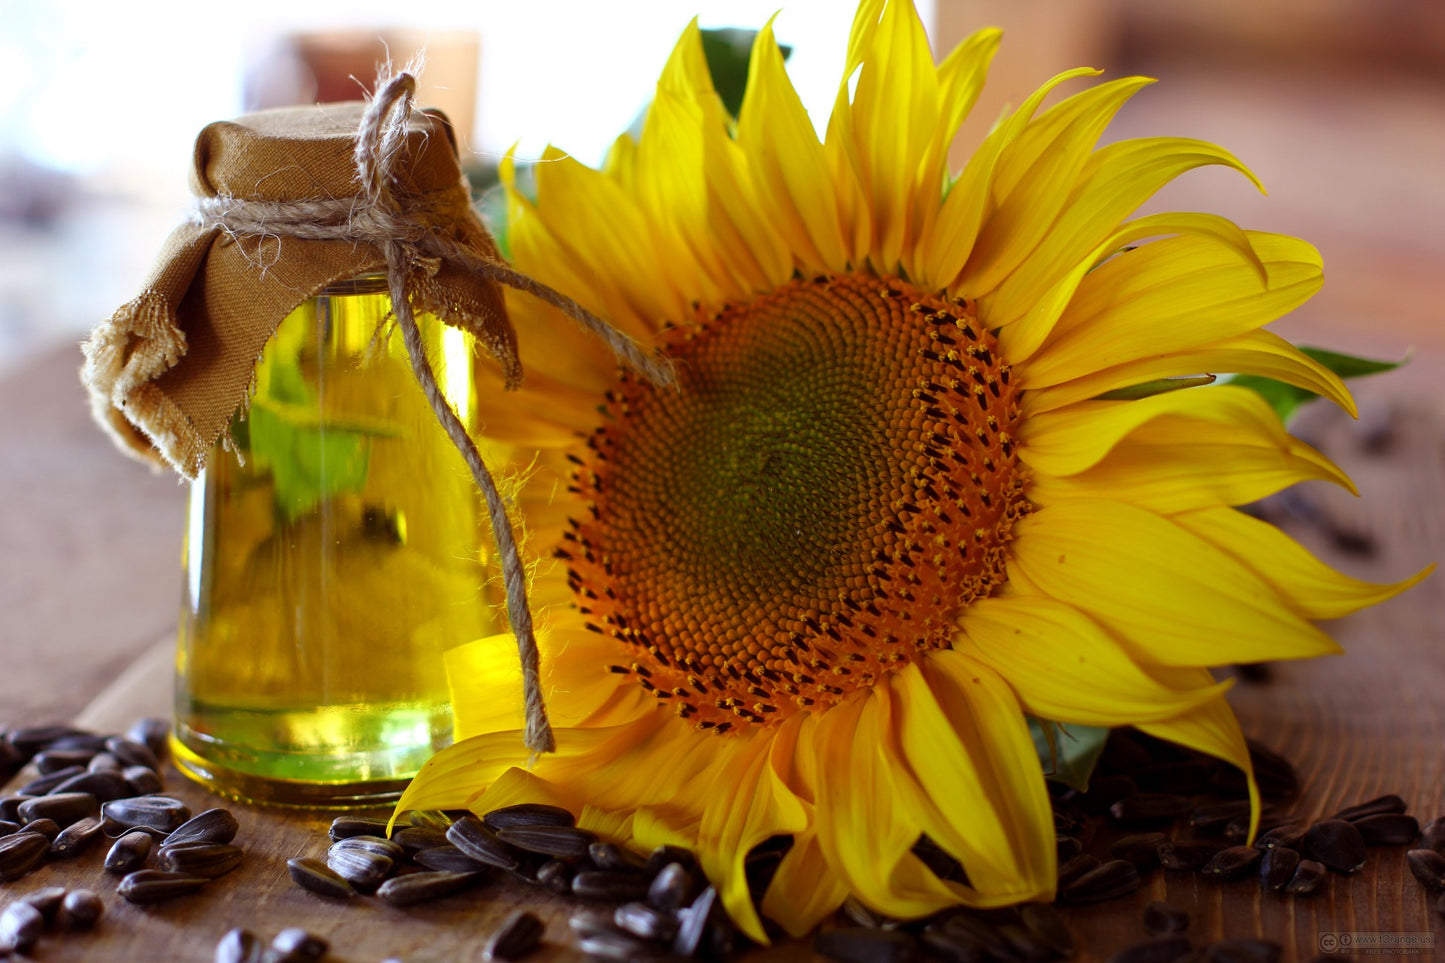 Sunflower Seed Oil